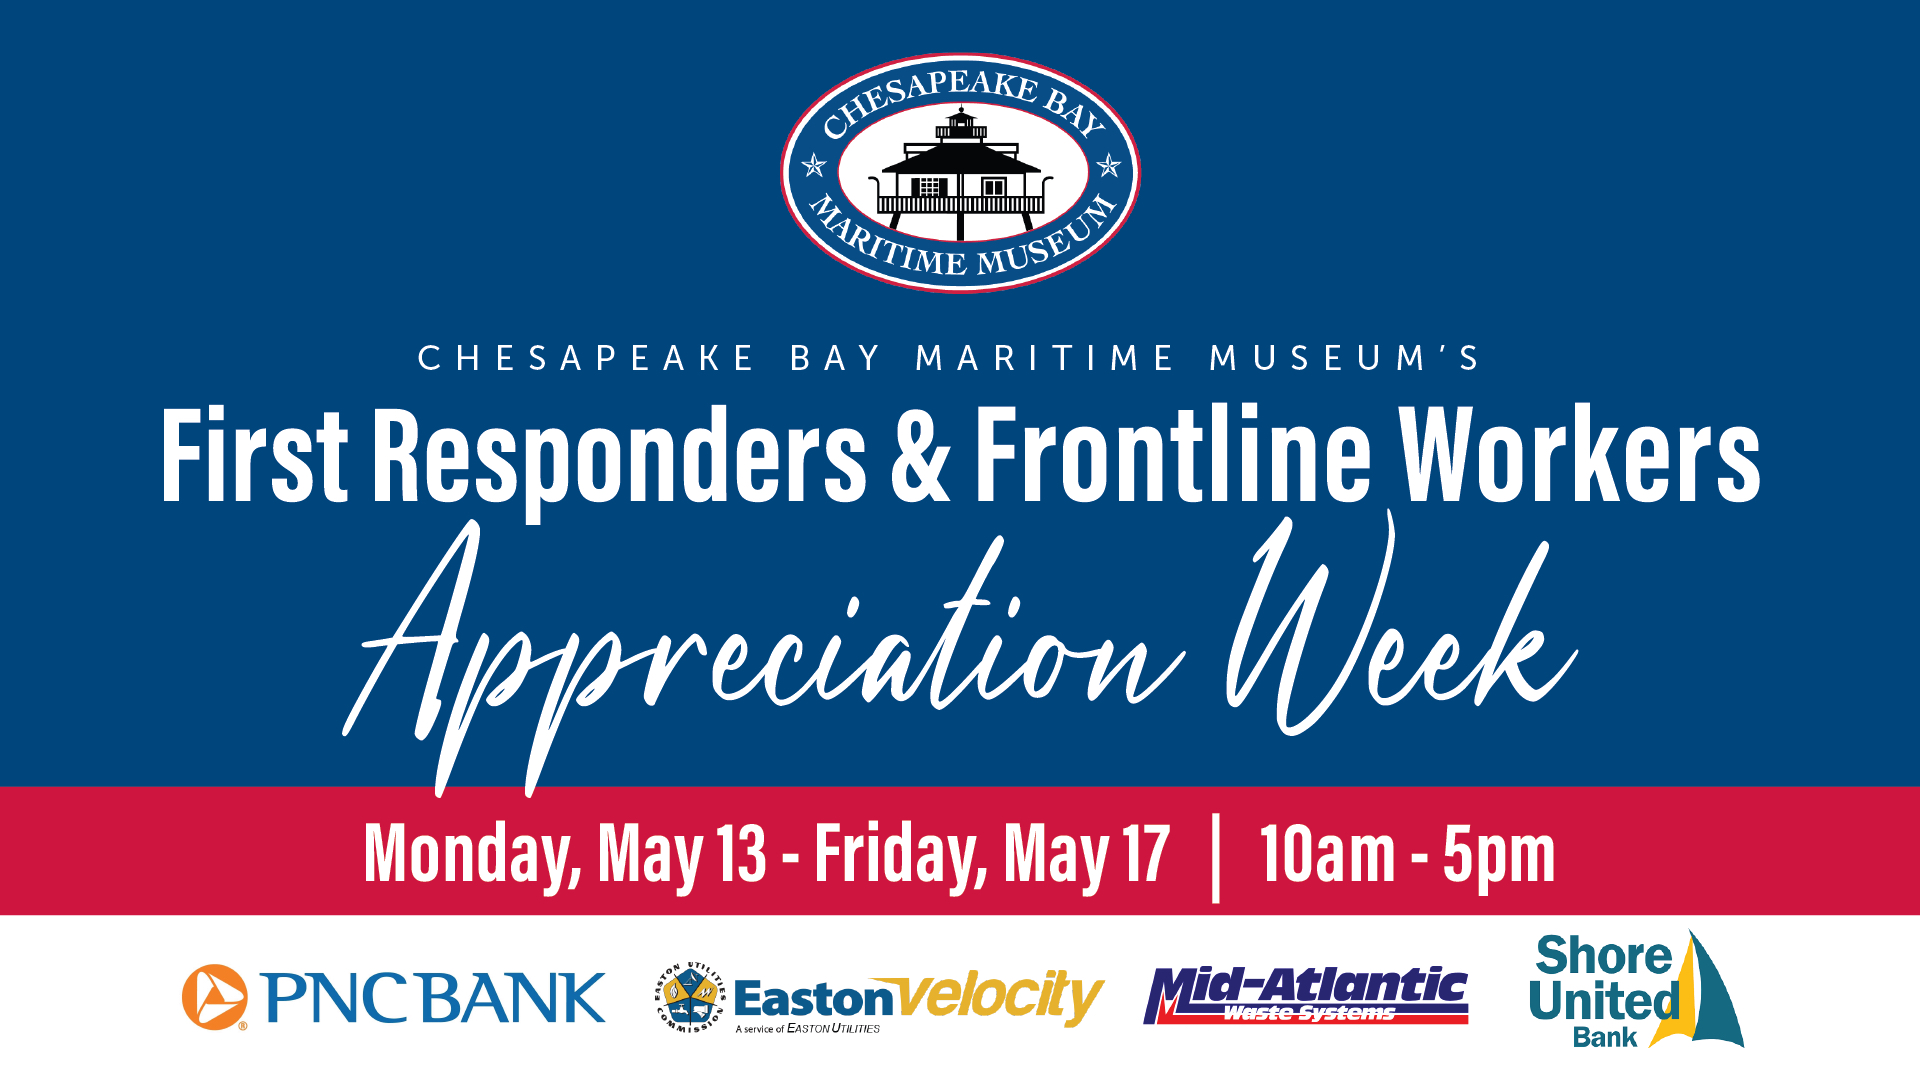 GRAPHIC: CBMM's First Responders & Frontline Workers Appreciation Week